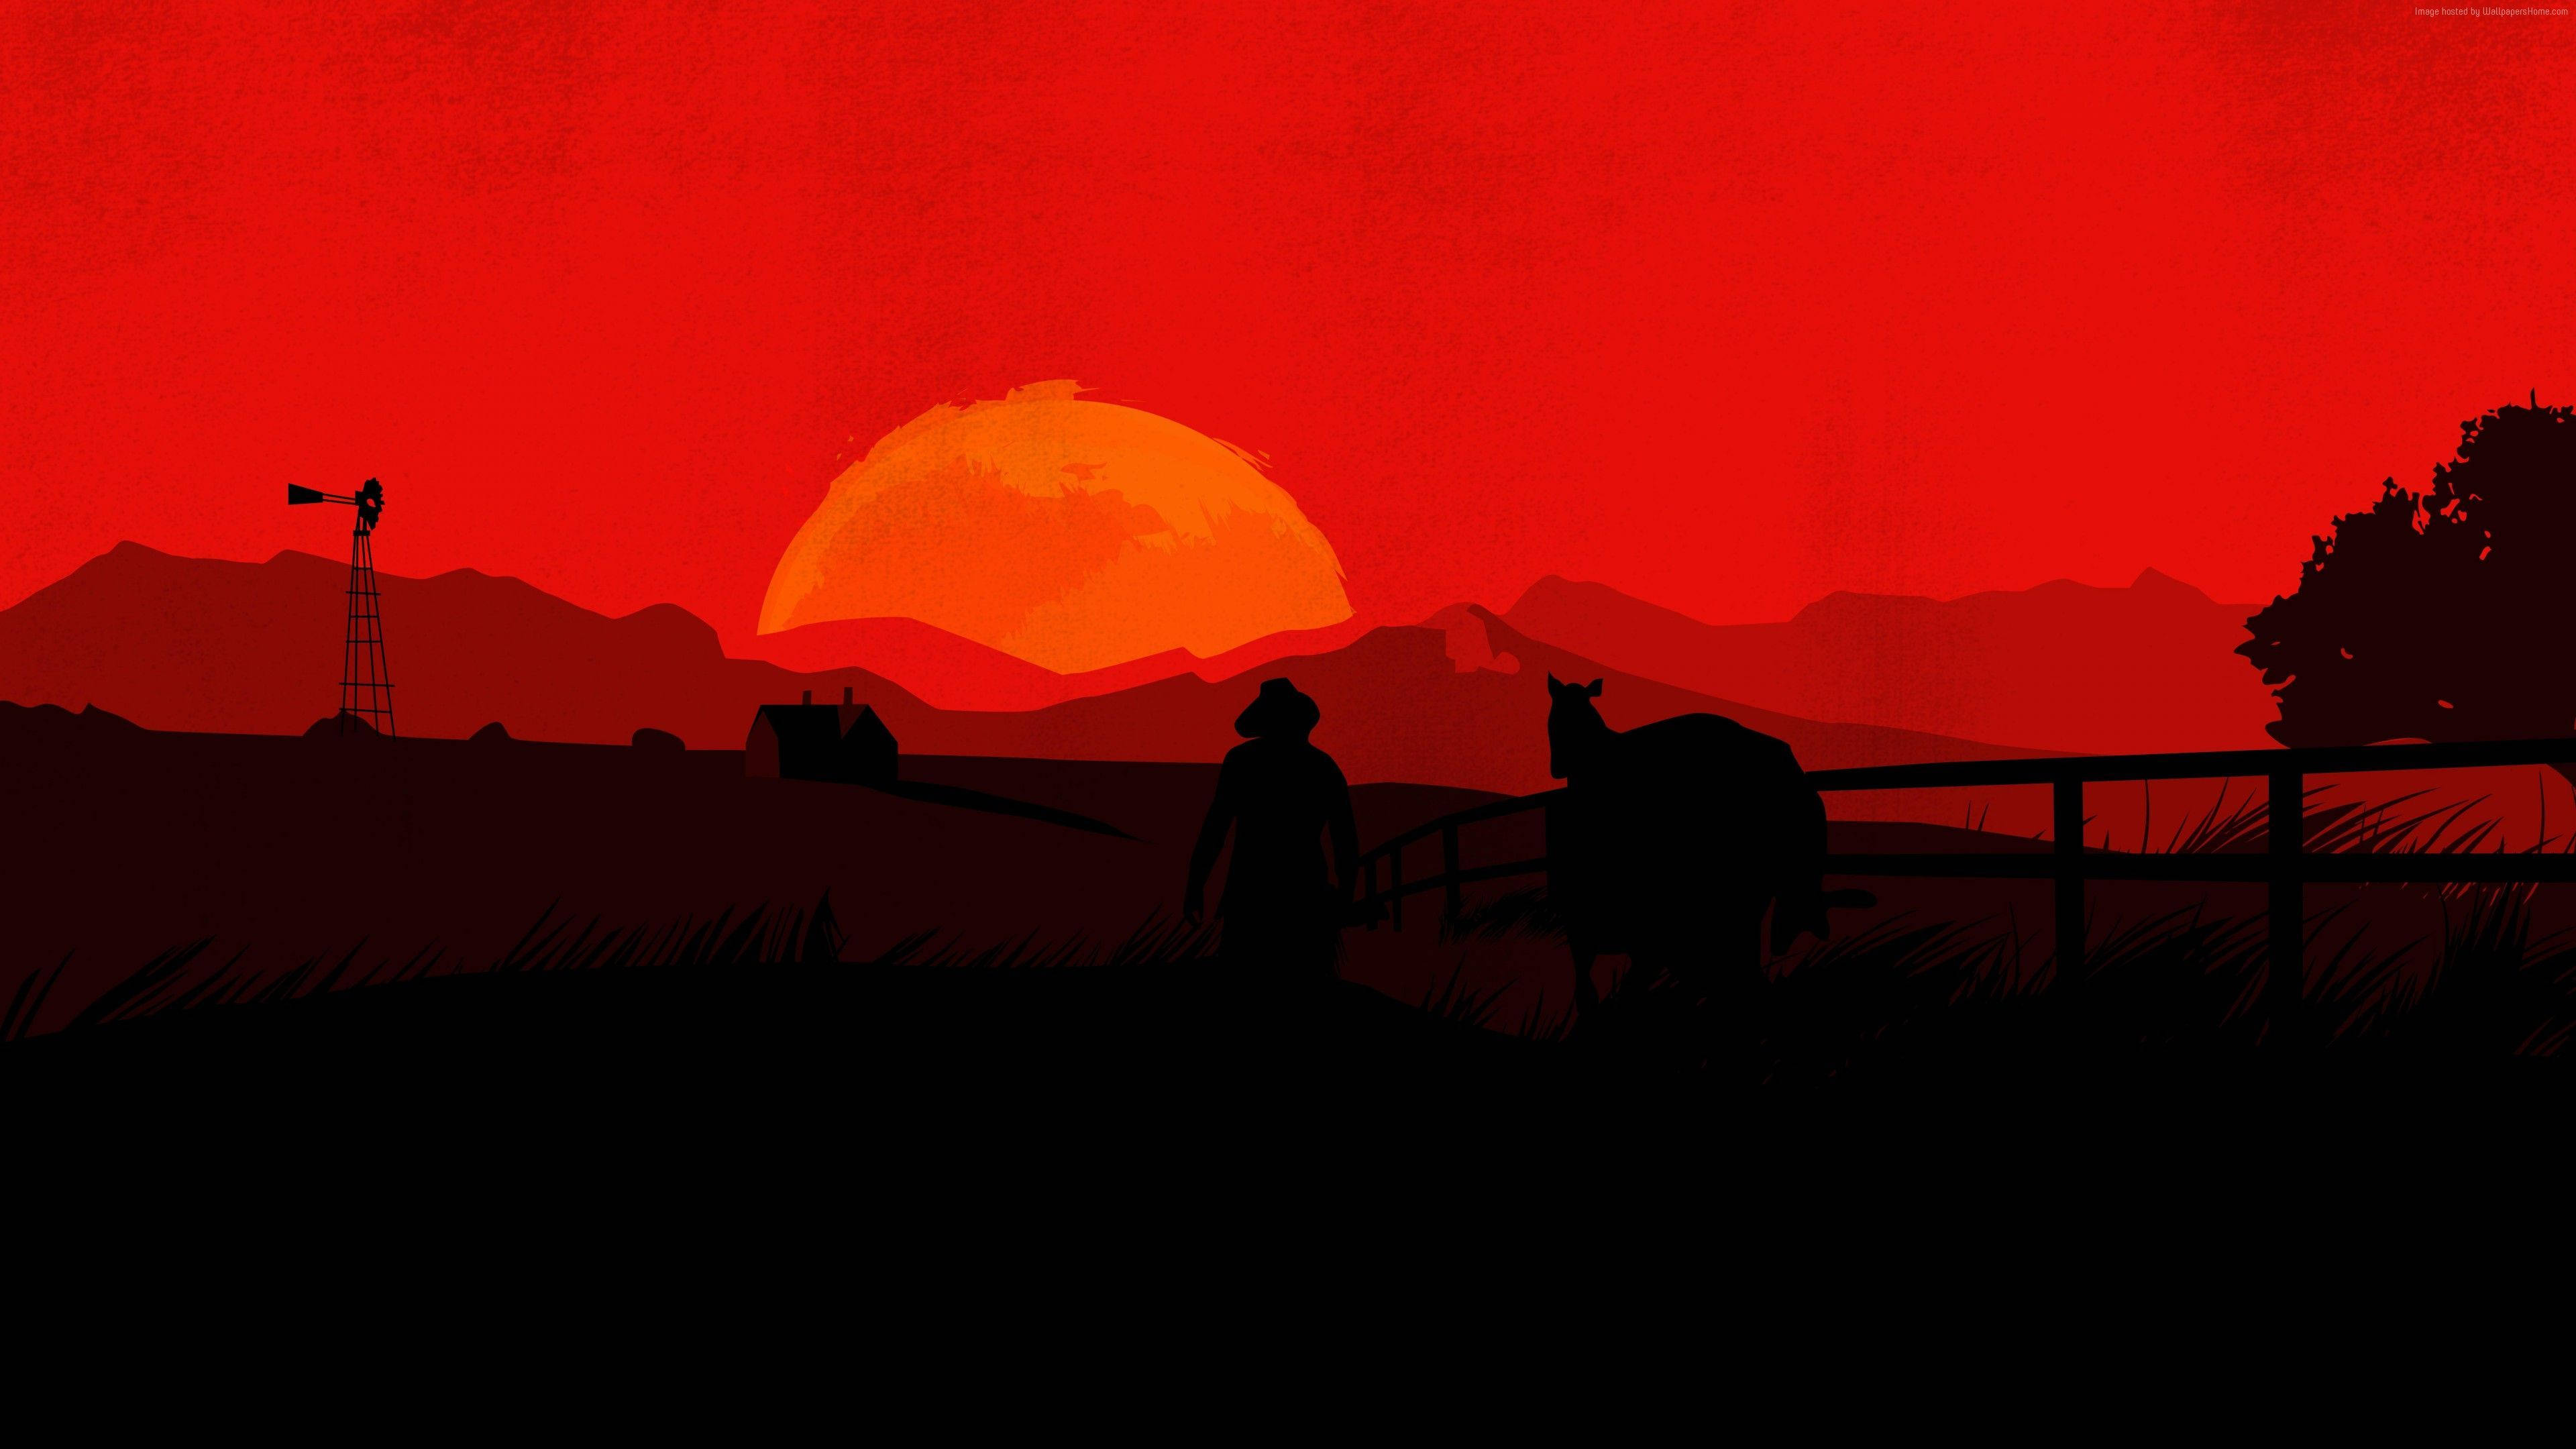 Red Dead Redemption 2 minimalistic wallpaper